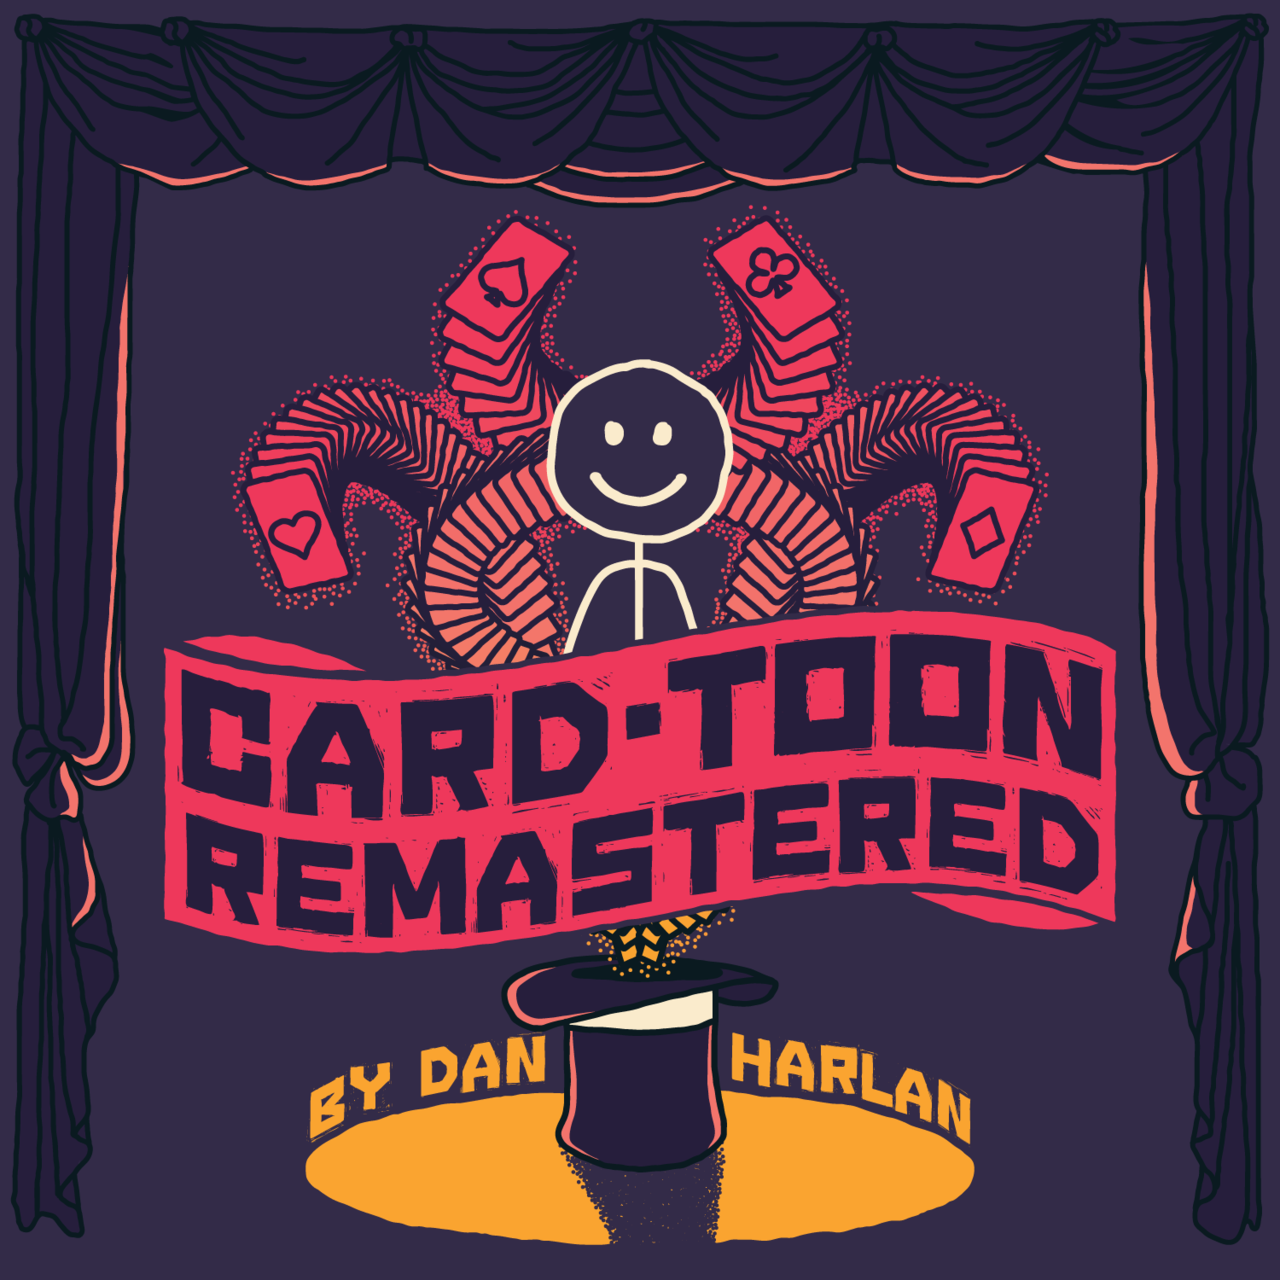 CardToon-Remastered-by-Dan-Harlan